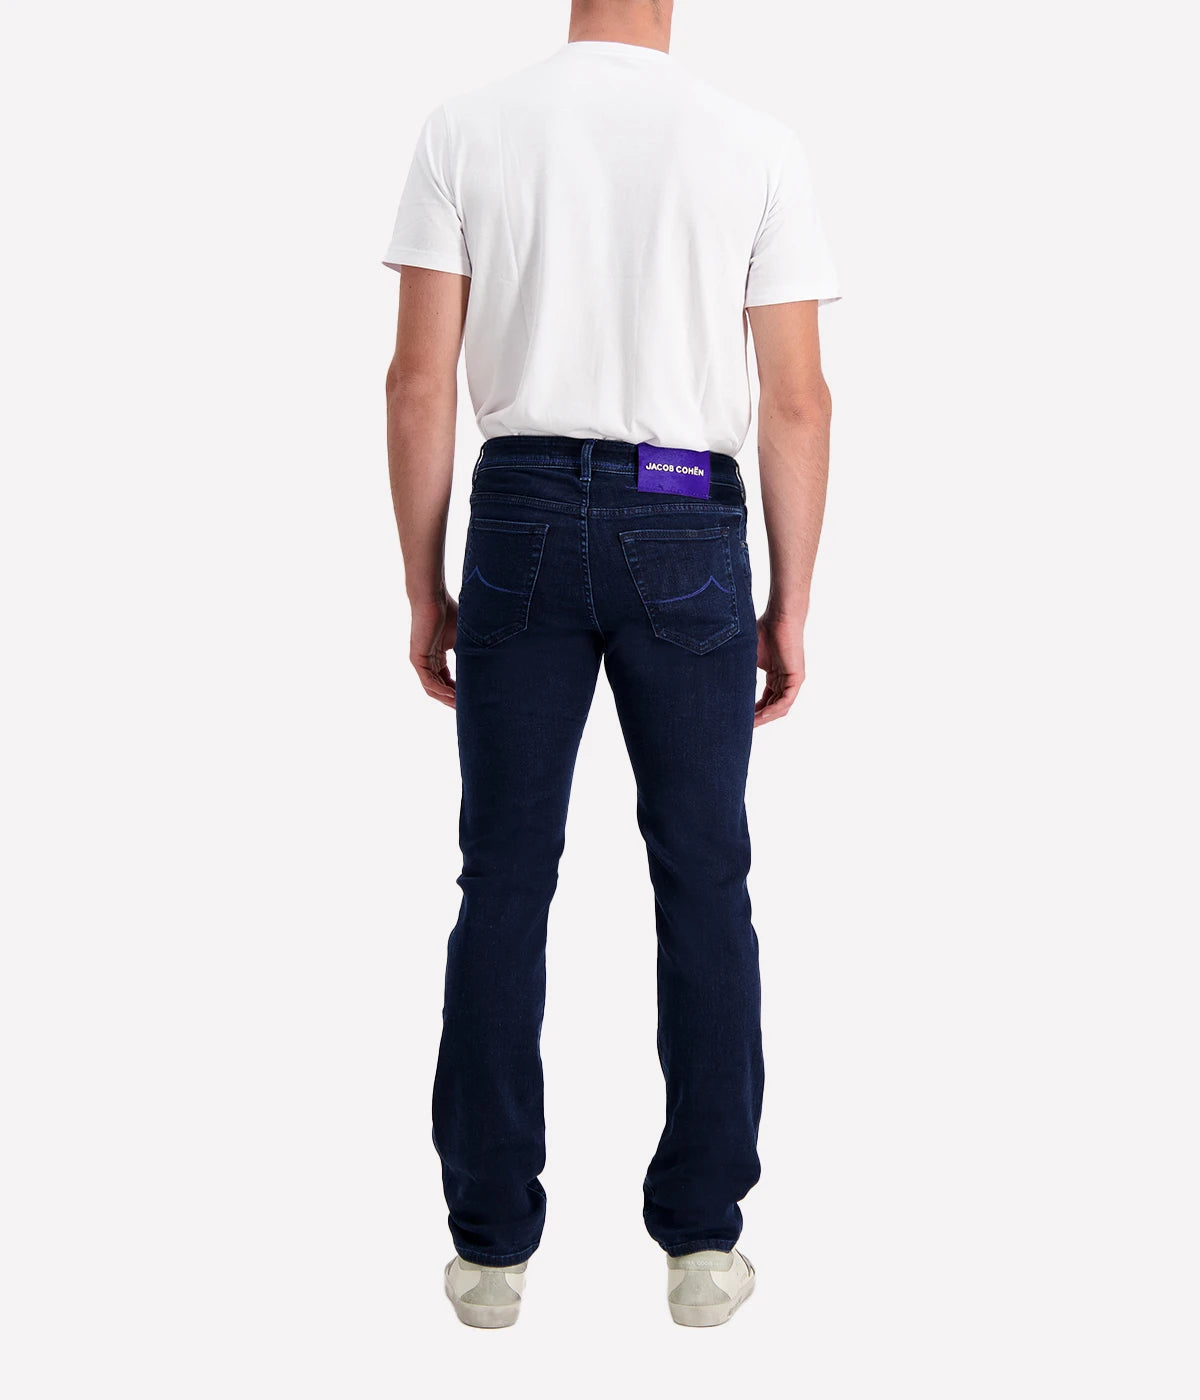 Bard 5 Pocket Slim Fit Jean in Dark Blue Purple